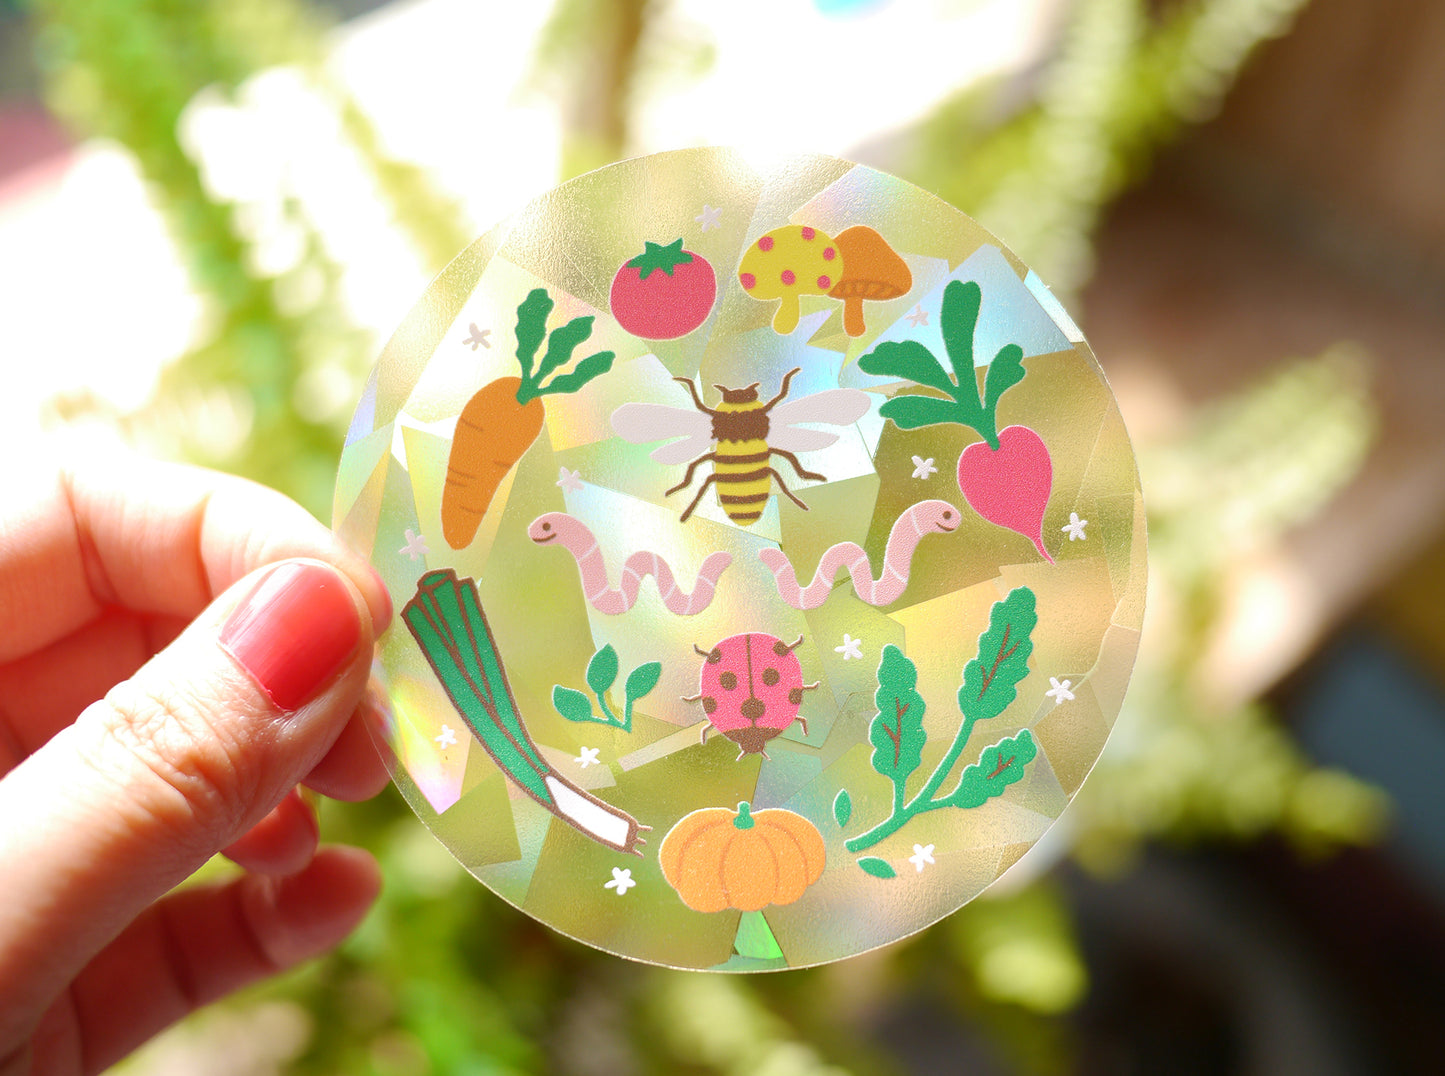 Greenfingers / Bees and bugs Suncatcher window decal - Rainbow maker window sticker